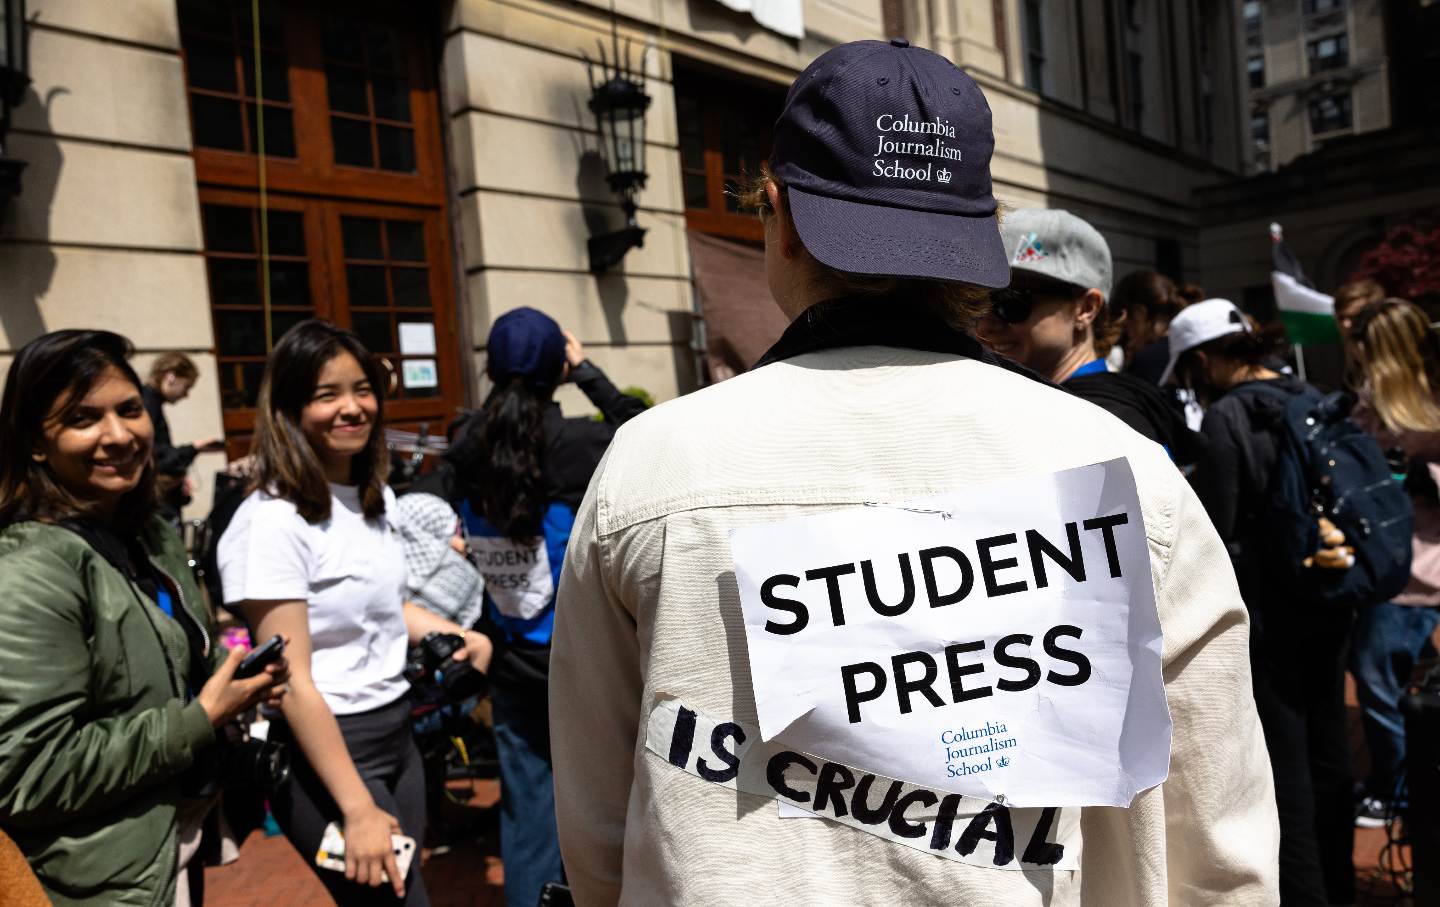 Columbia University student journalist